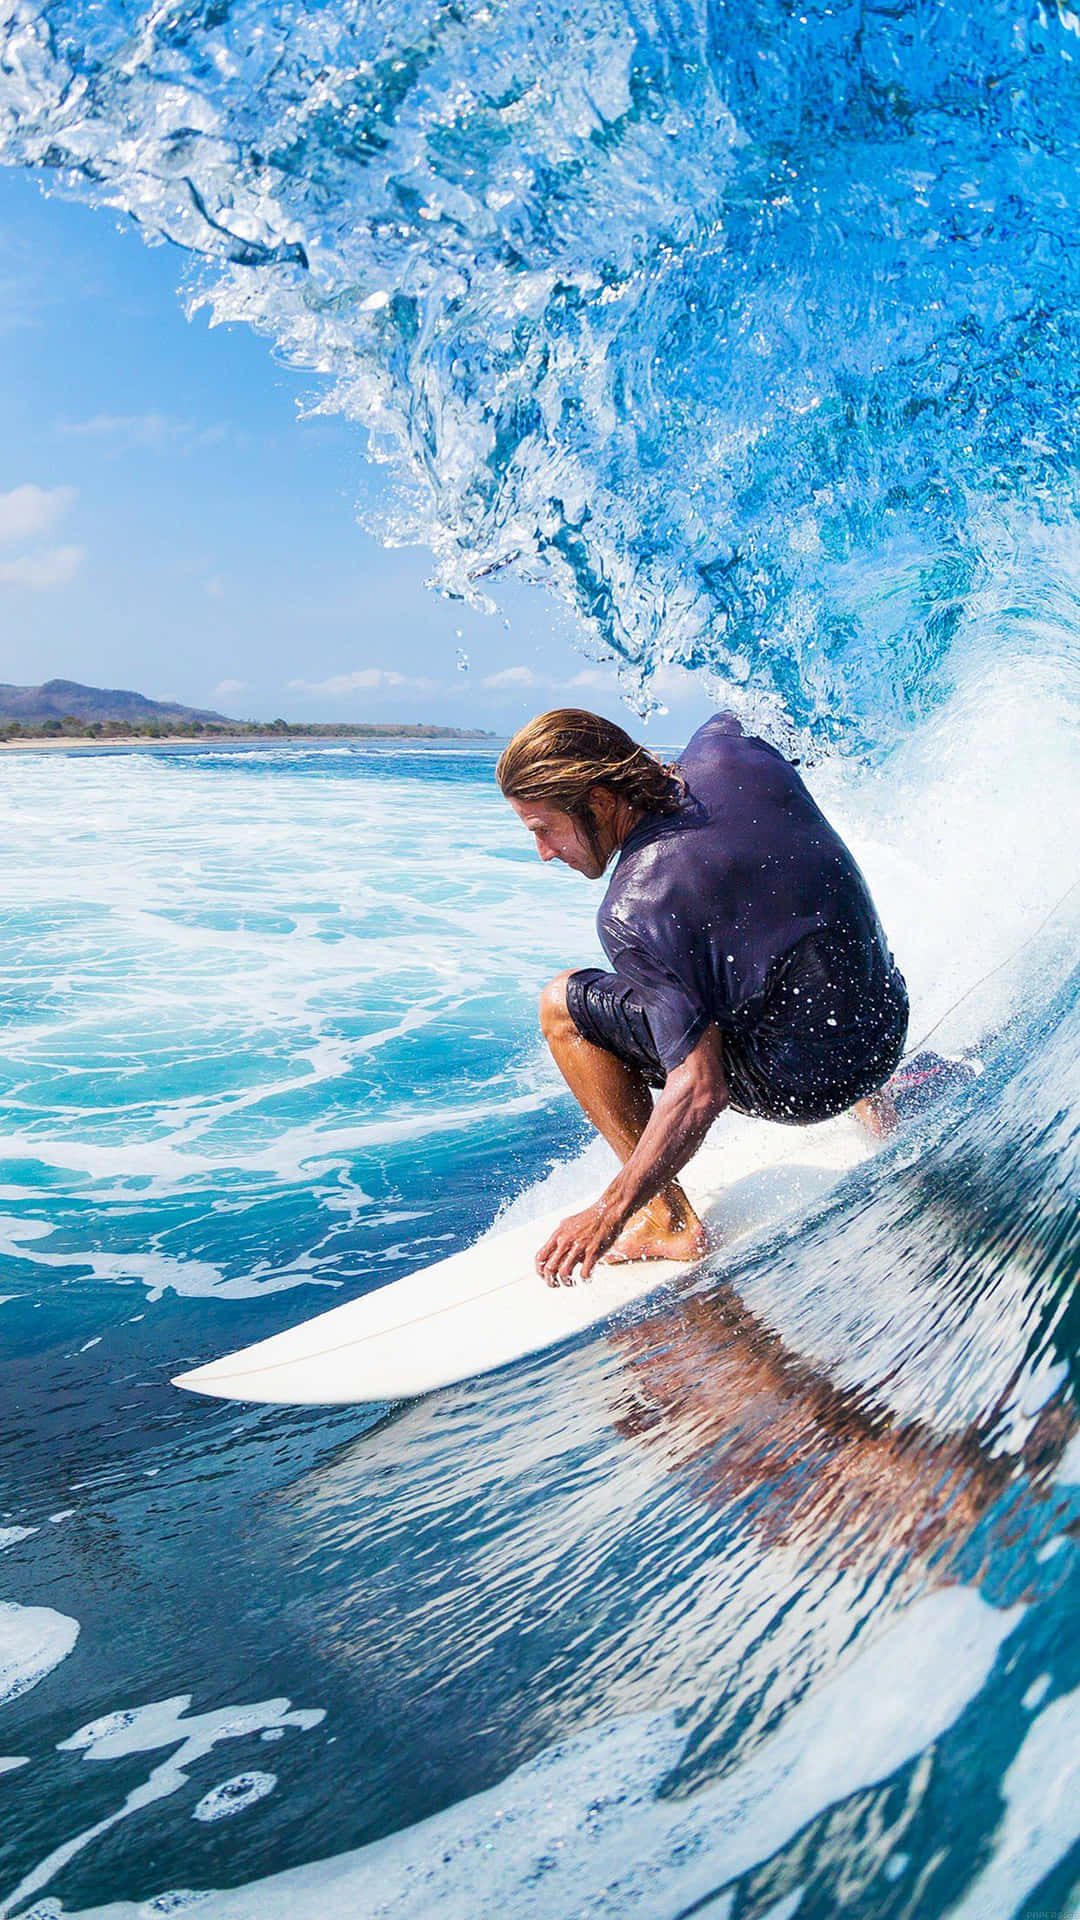 Surfing Iphone 1242 X 2208 Wallpaper